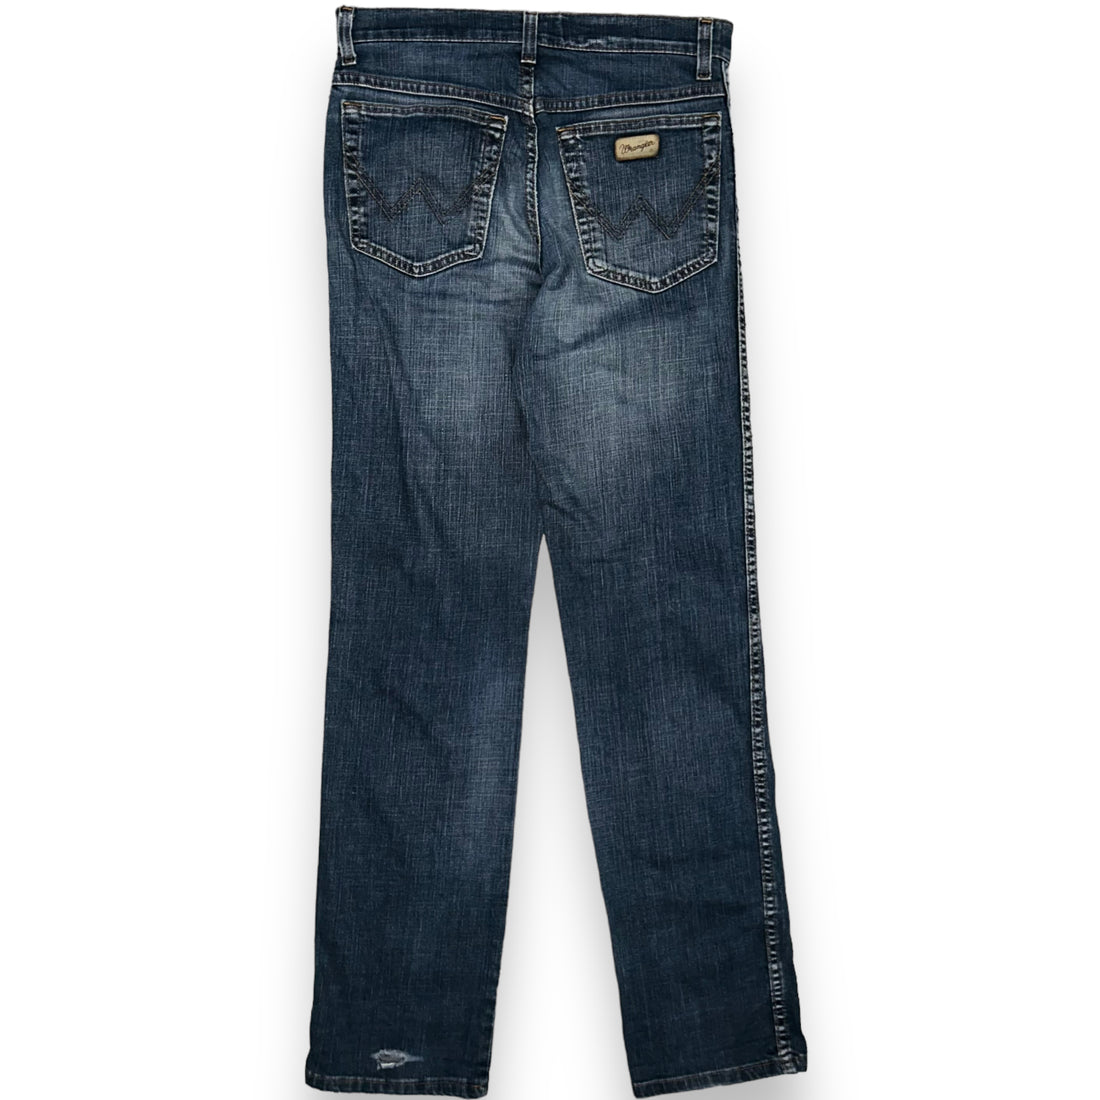 WRANGLER Jeans (30 US S)